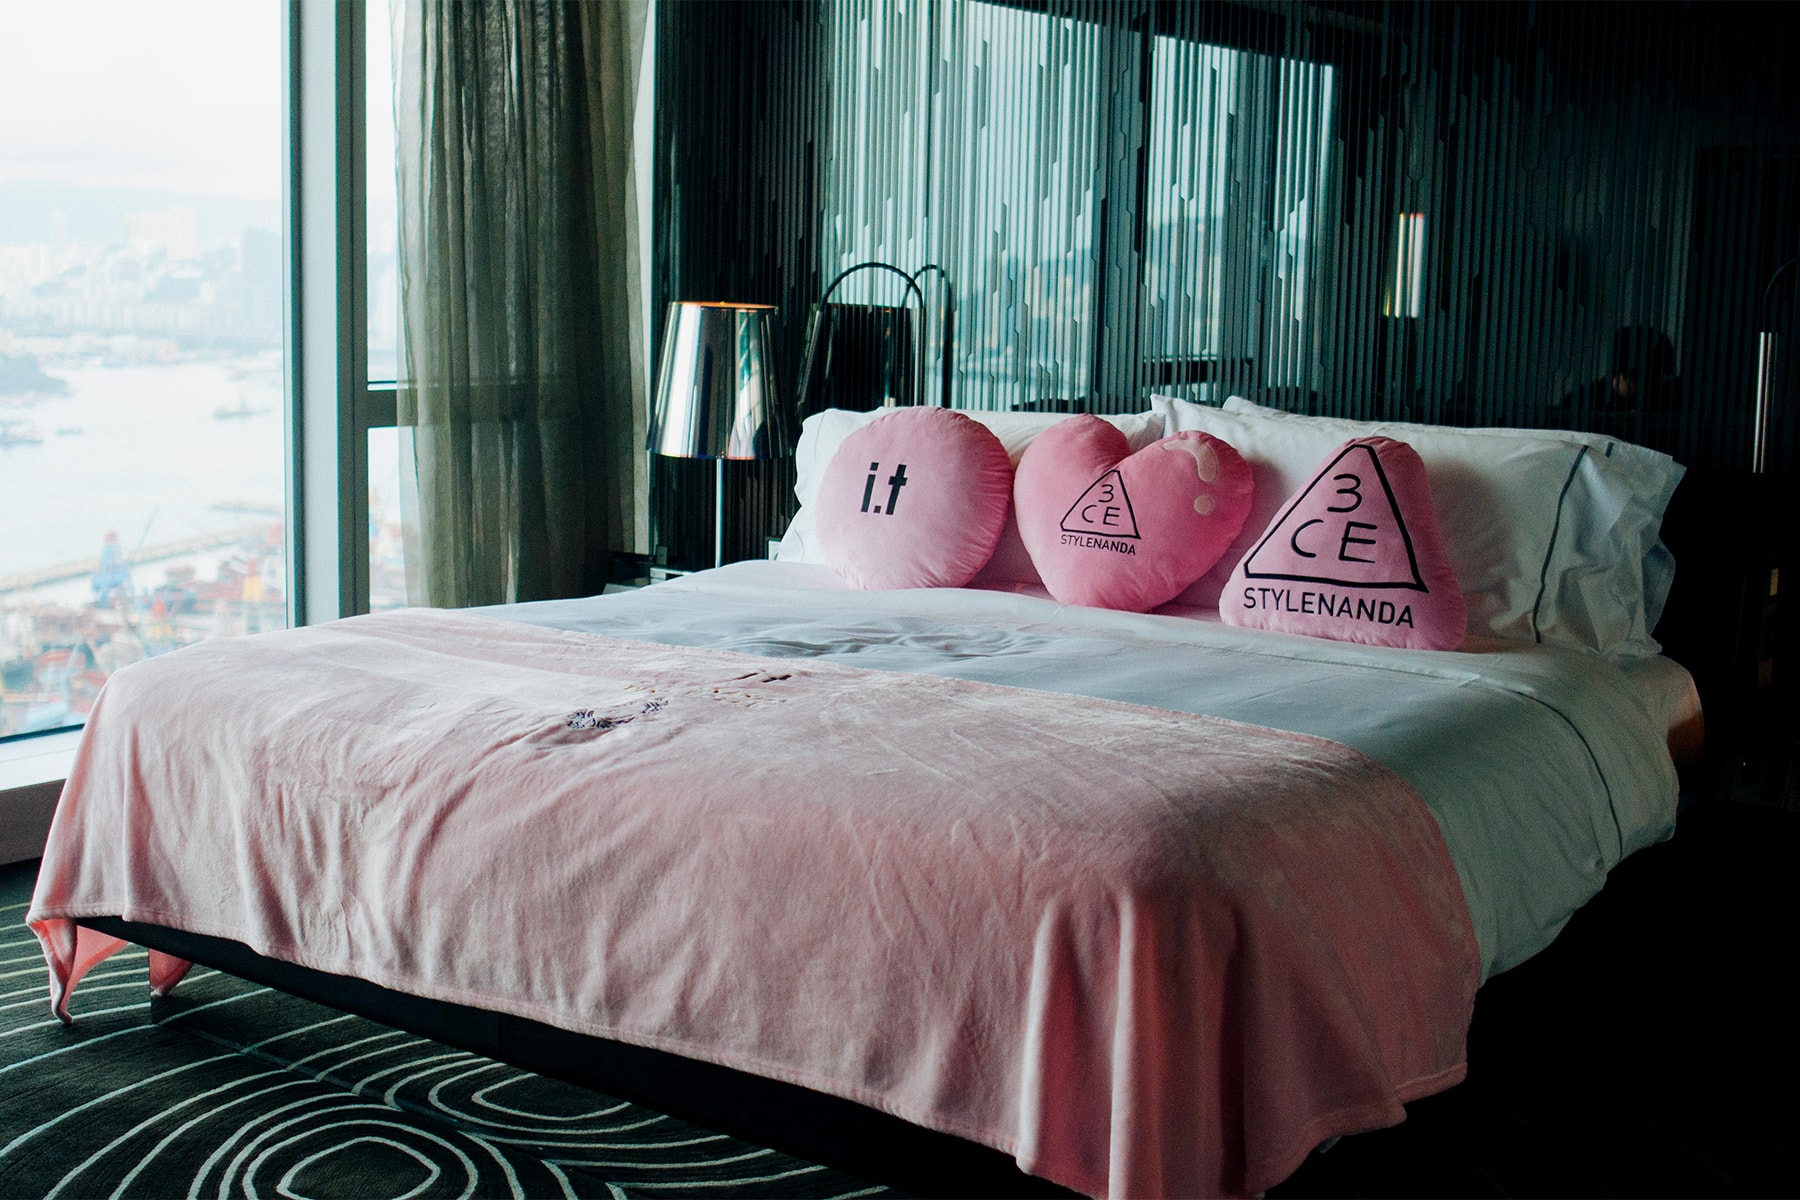 stylenanda 3ce pink hotel makeup korean beauty fashion w hotel hong kong